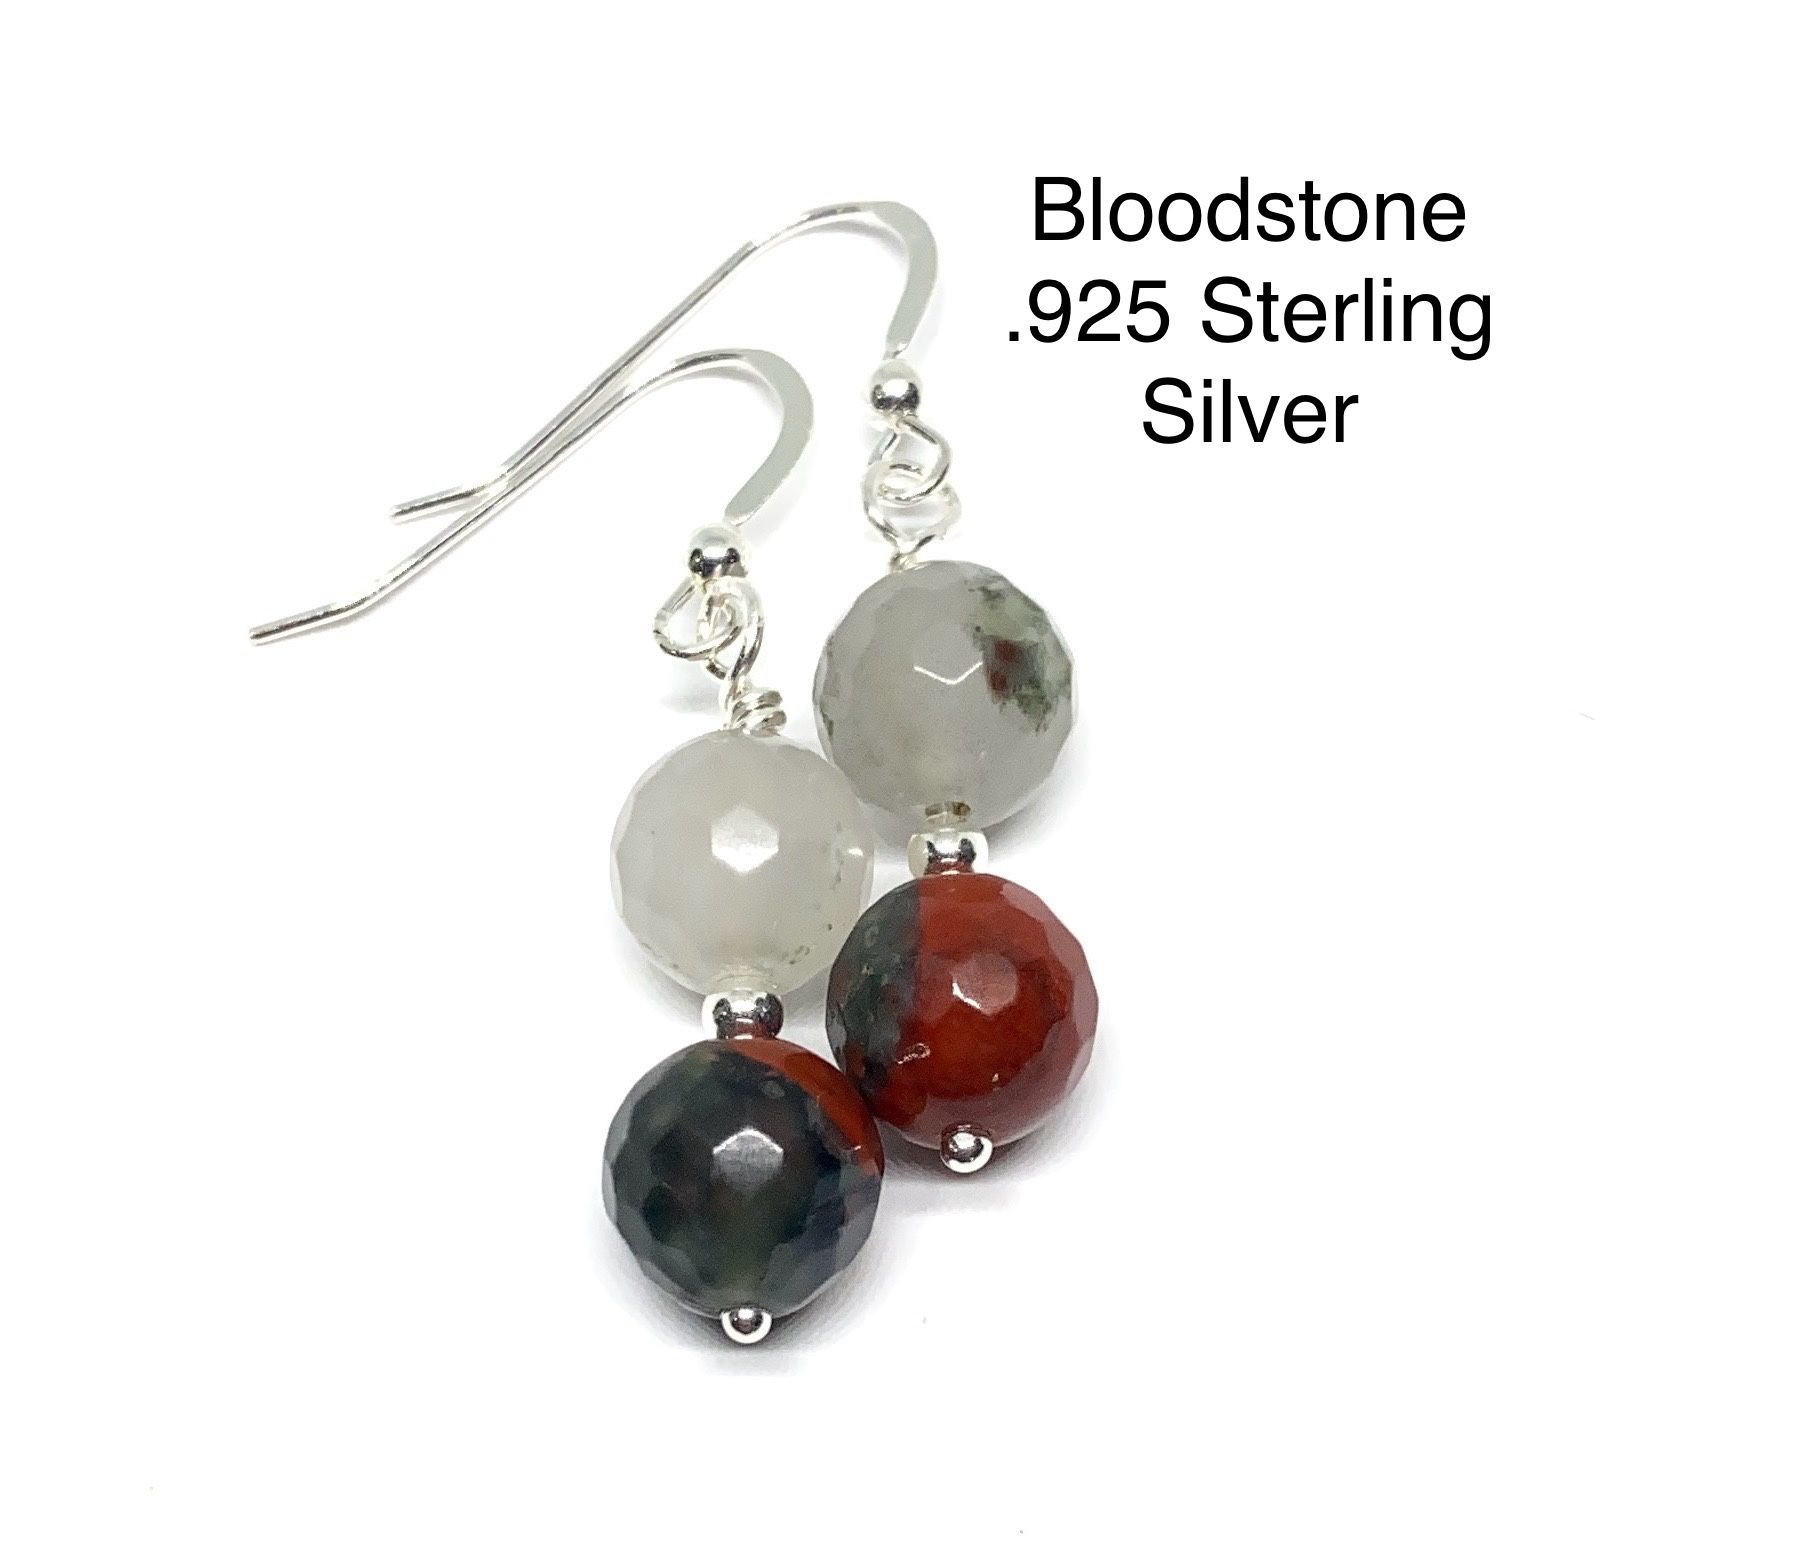 Bloodstone Jasper Genuine Stone .925 Hand Stamped Sterling Silver Earrings